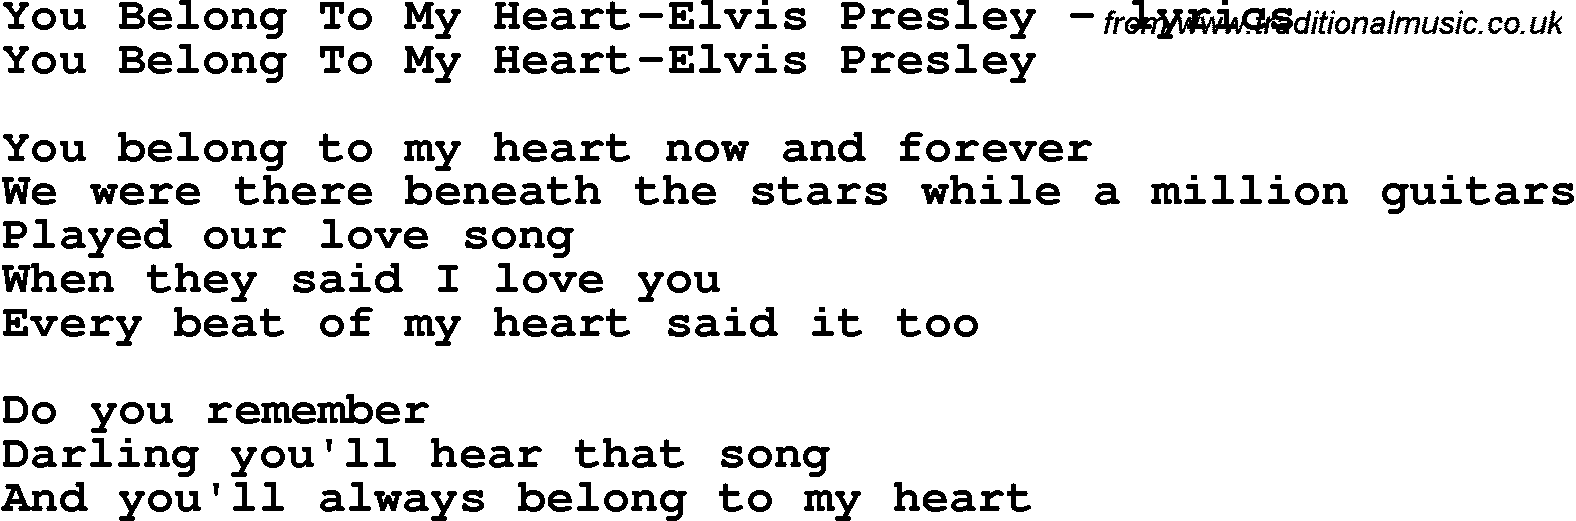 Love Song Lyrics for: You Belong To My Heart-Elvis Presley